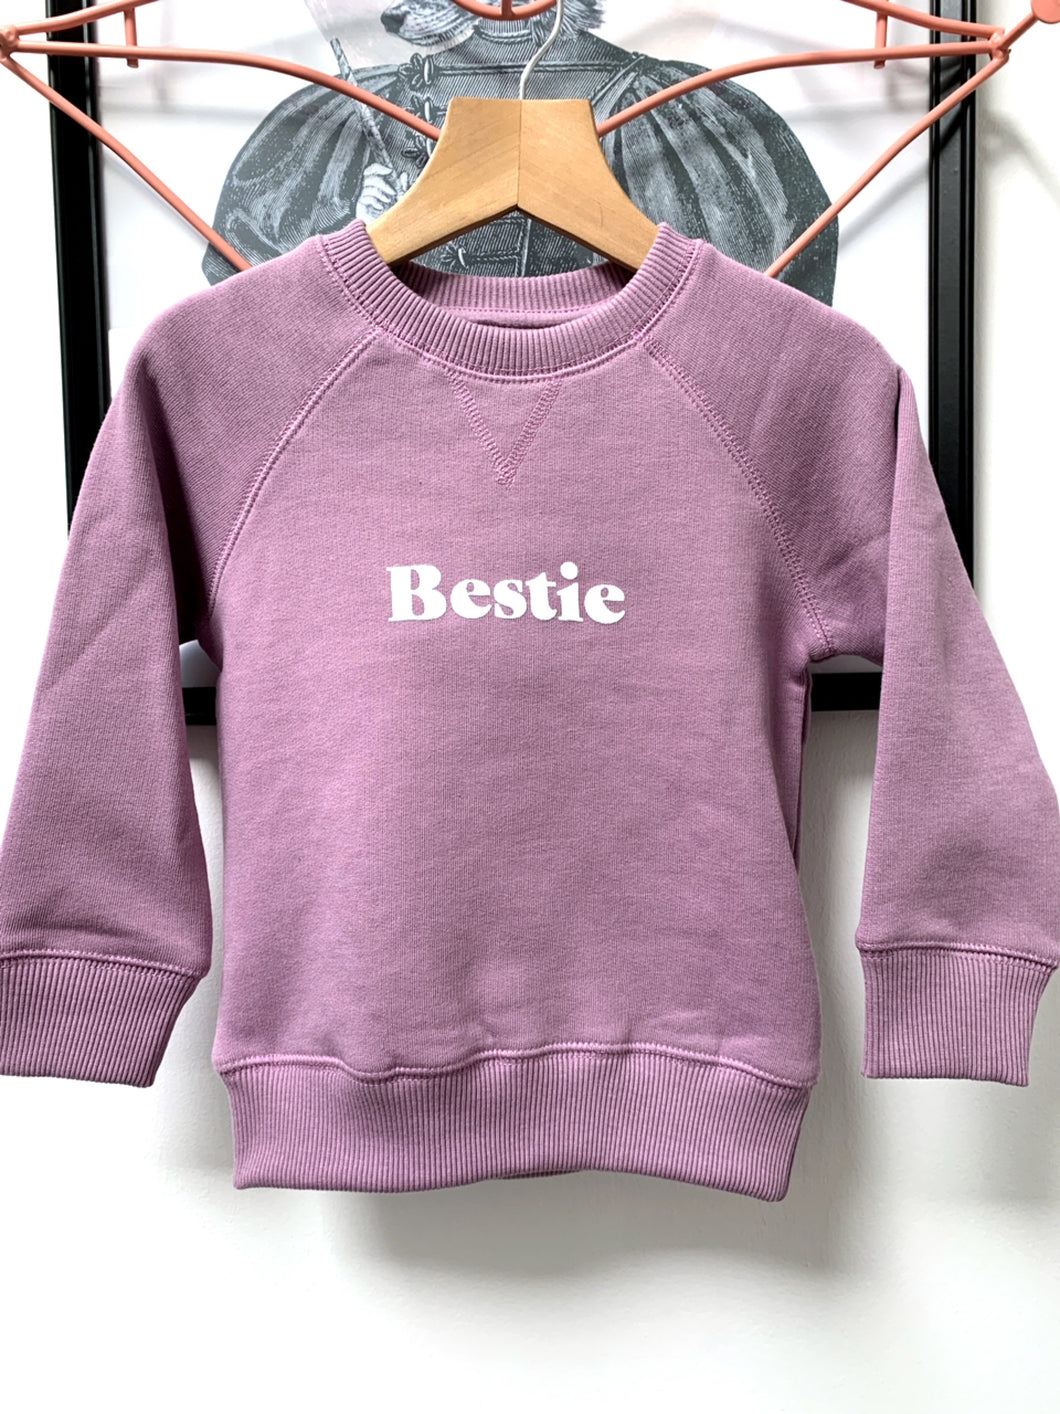 Bob & Blossom 'Bestie' Sweatshirt